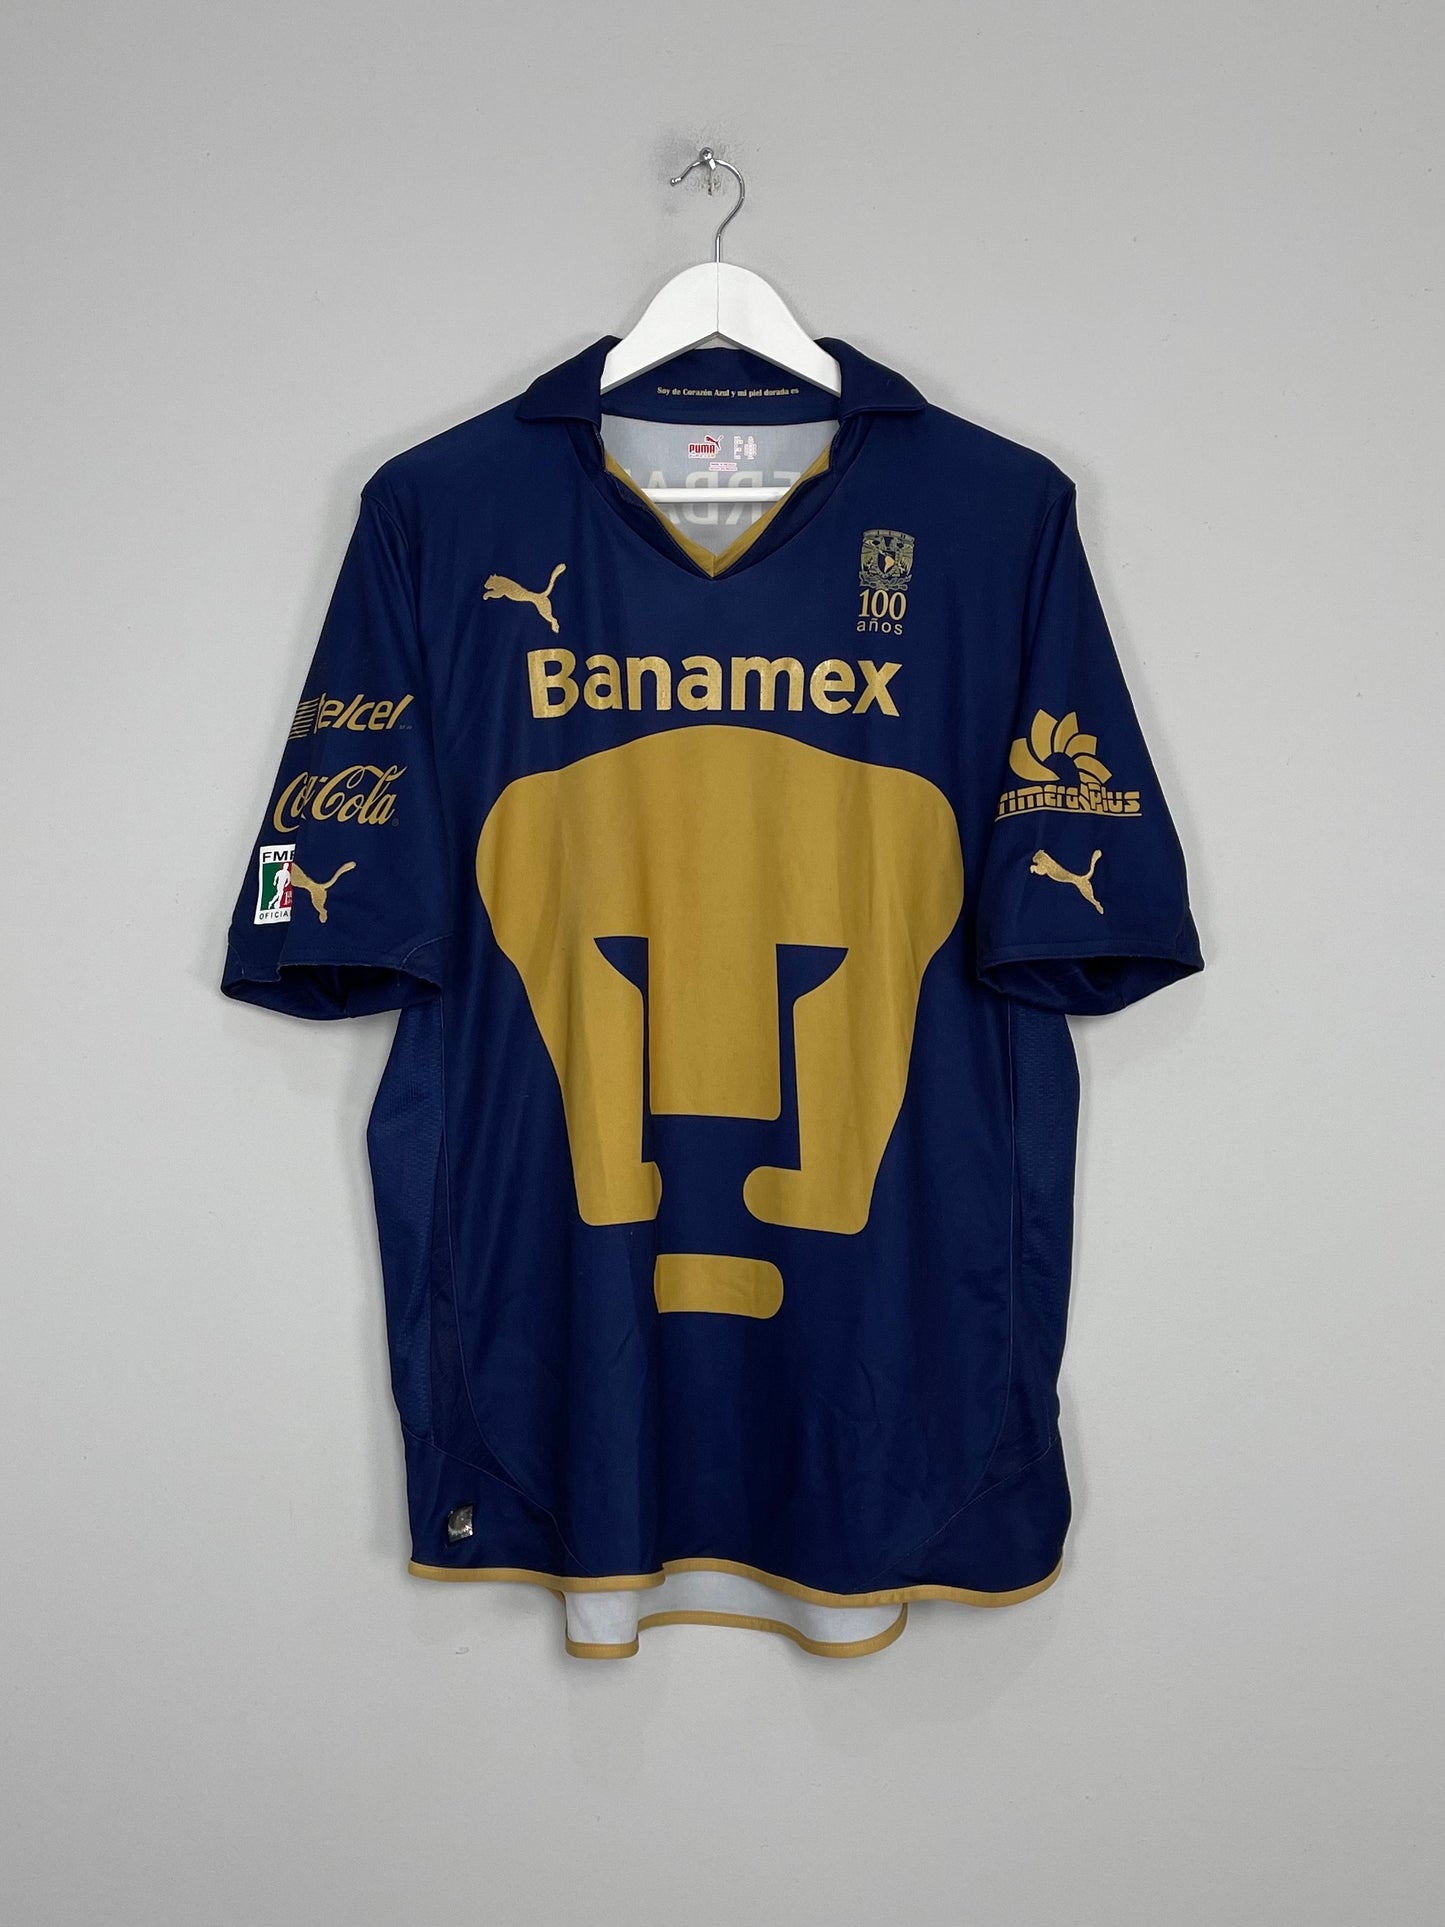 Image of the UNAM Pumas shirt from the 2010/11 season